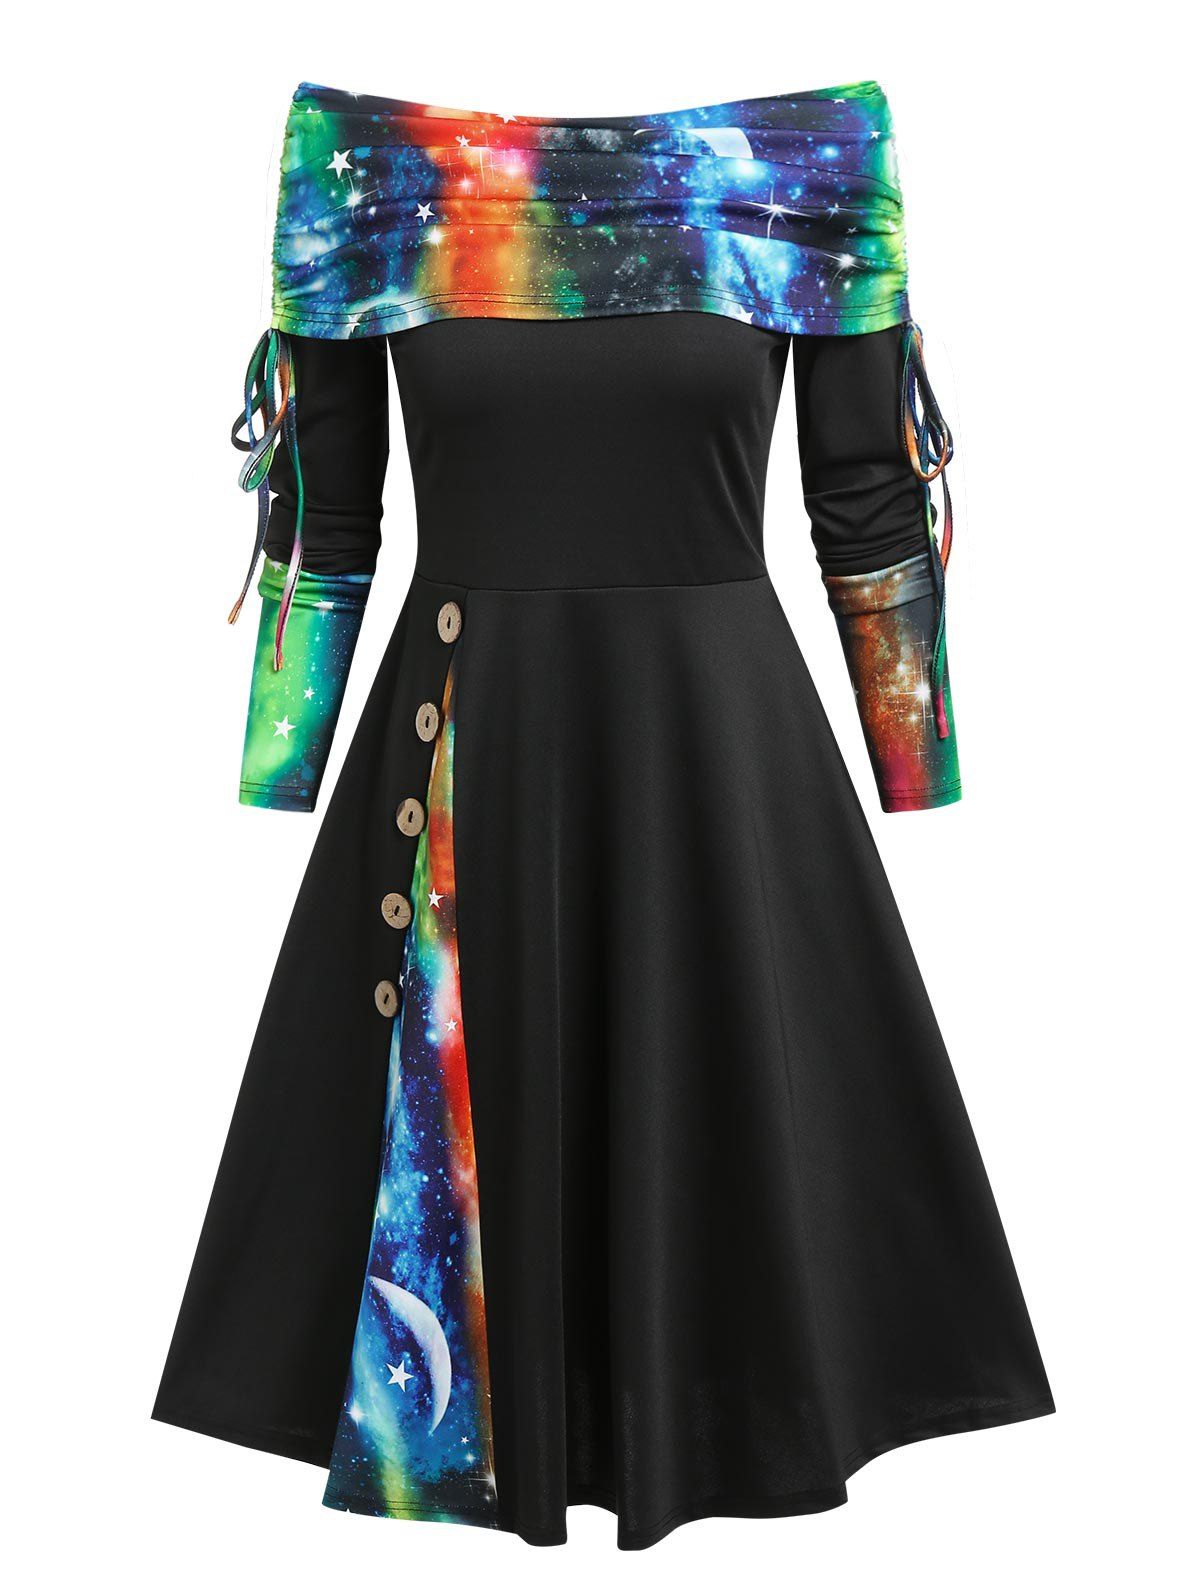 Vintage Galaxy Print Off Shoulder Cinched Tied Contrast A Line Dress - BLACK S